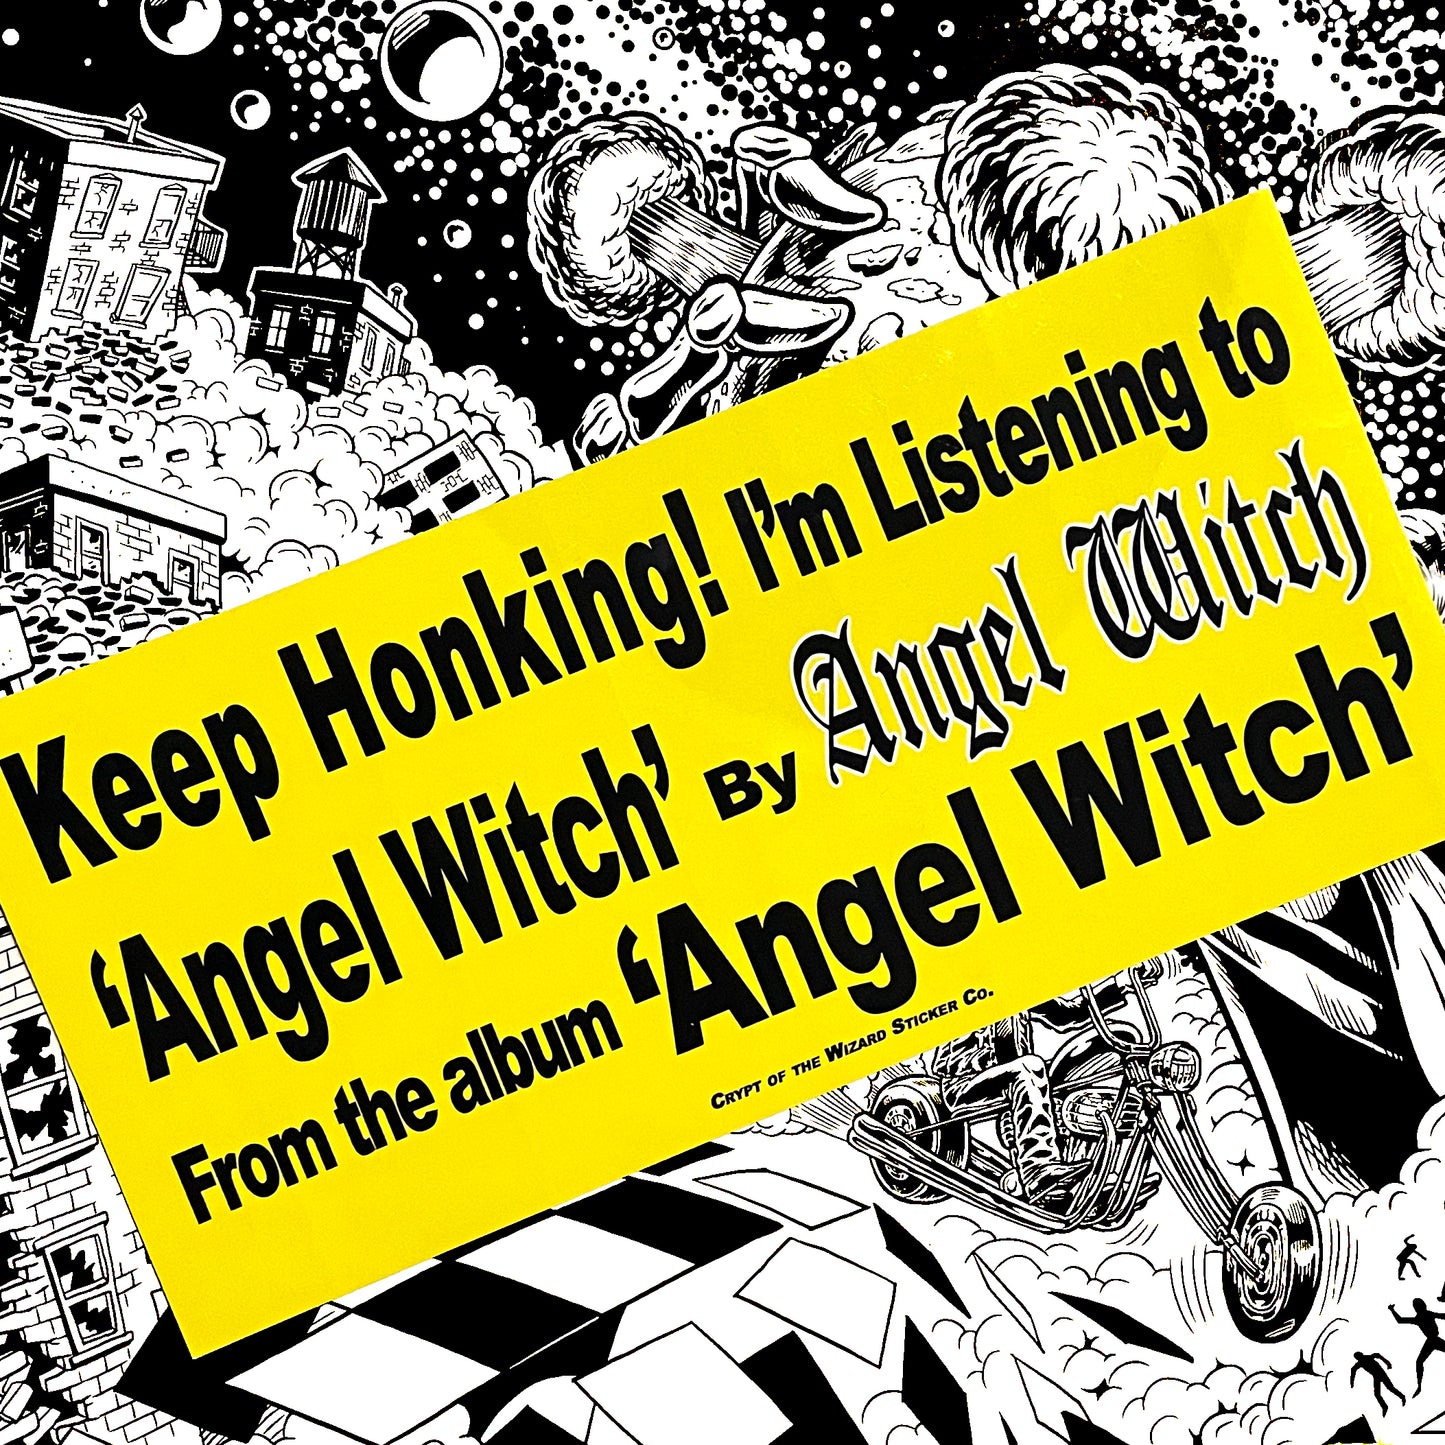 Keep Honking 'Angel Witch' HUGE Bumper Sticker